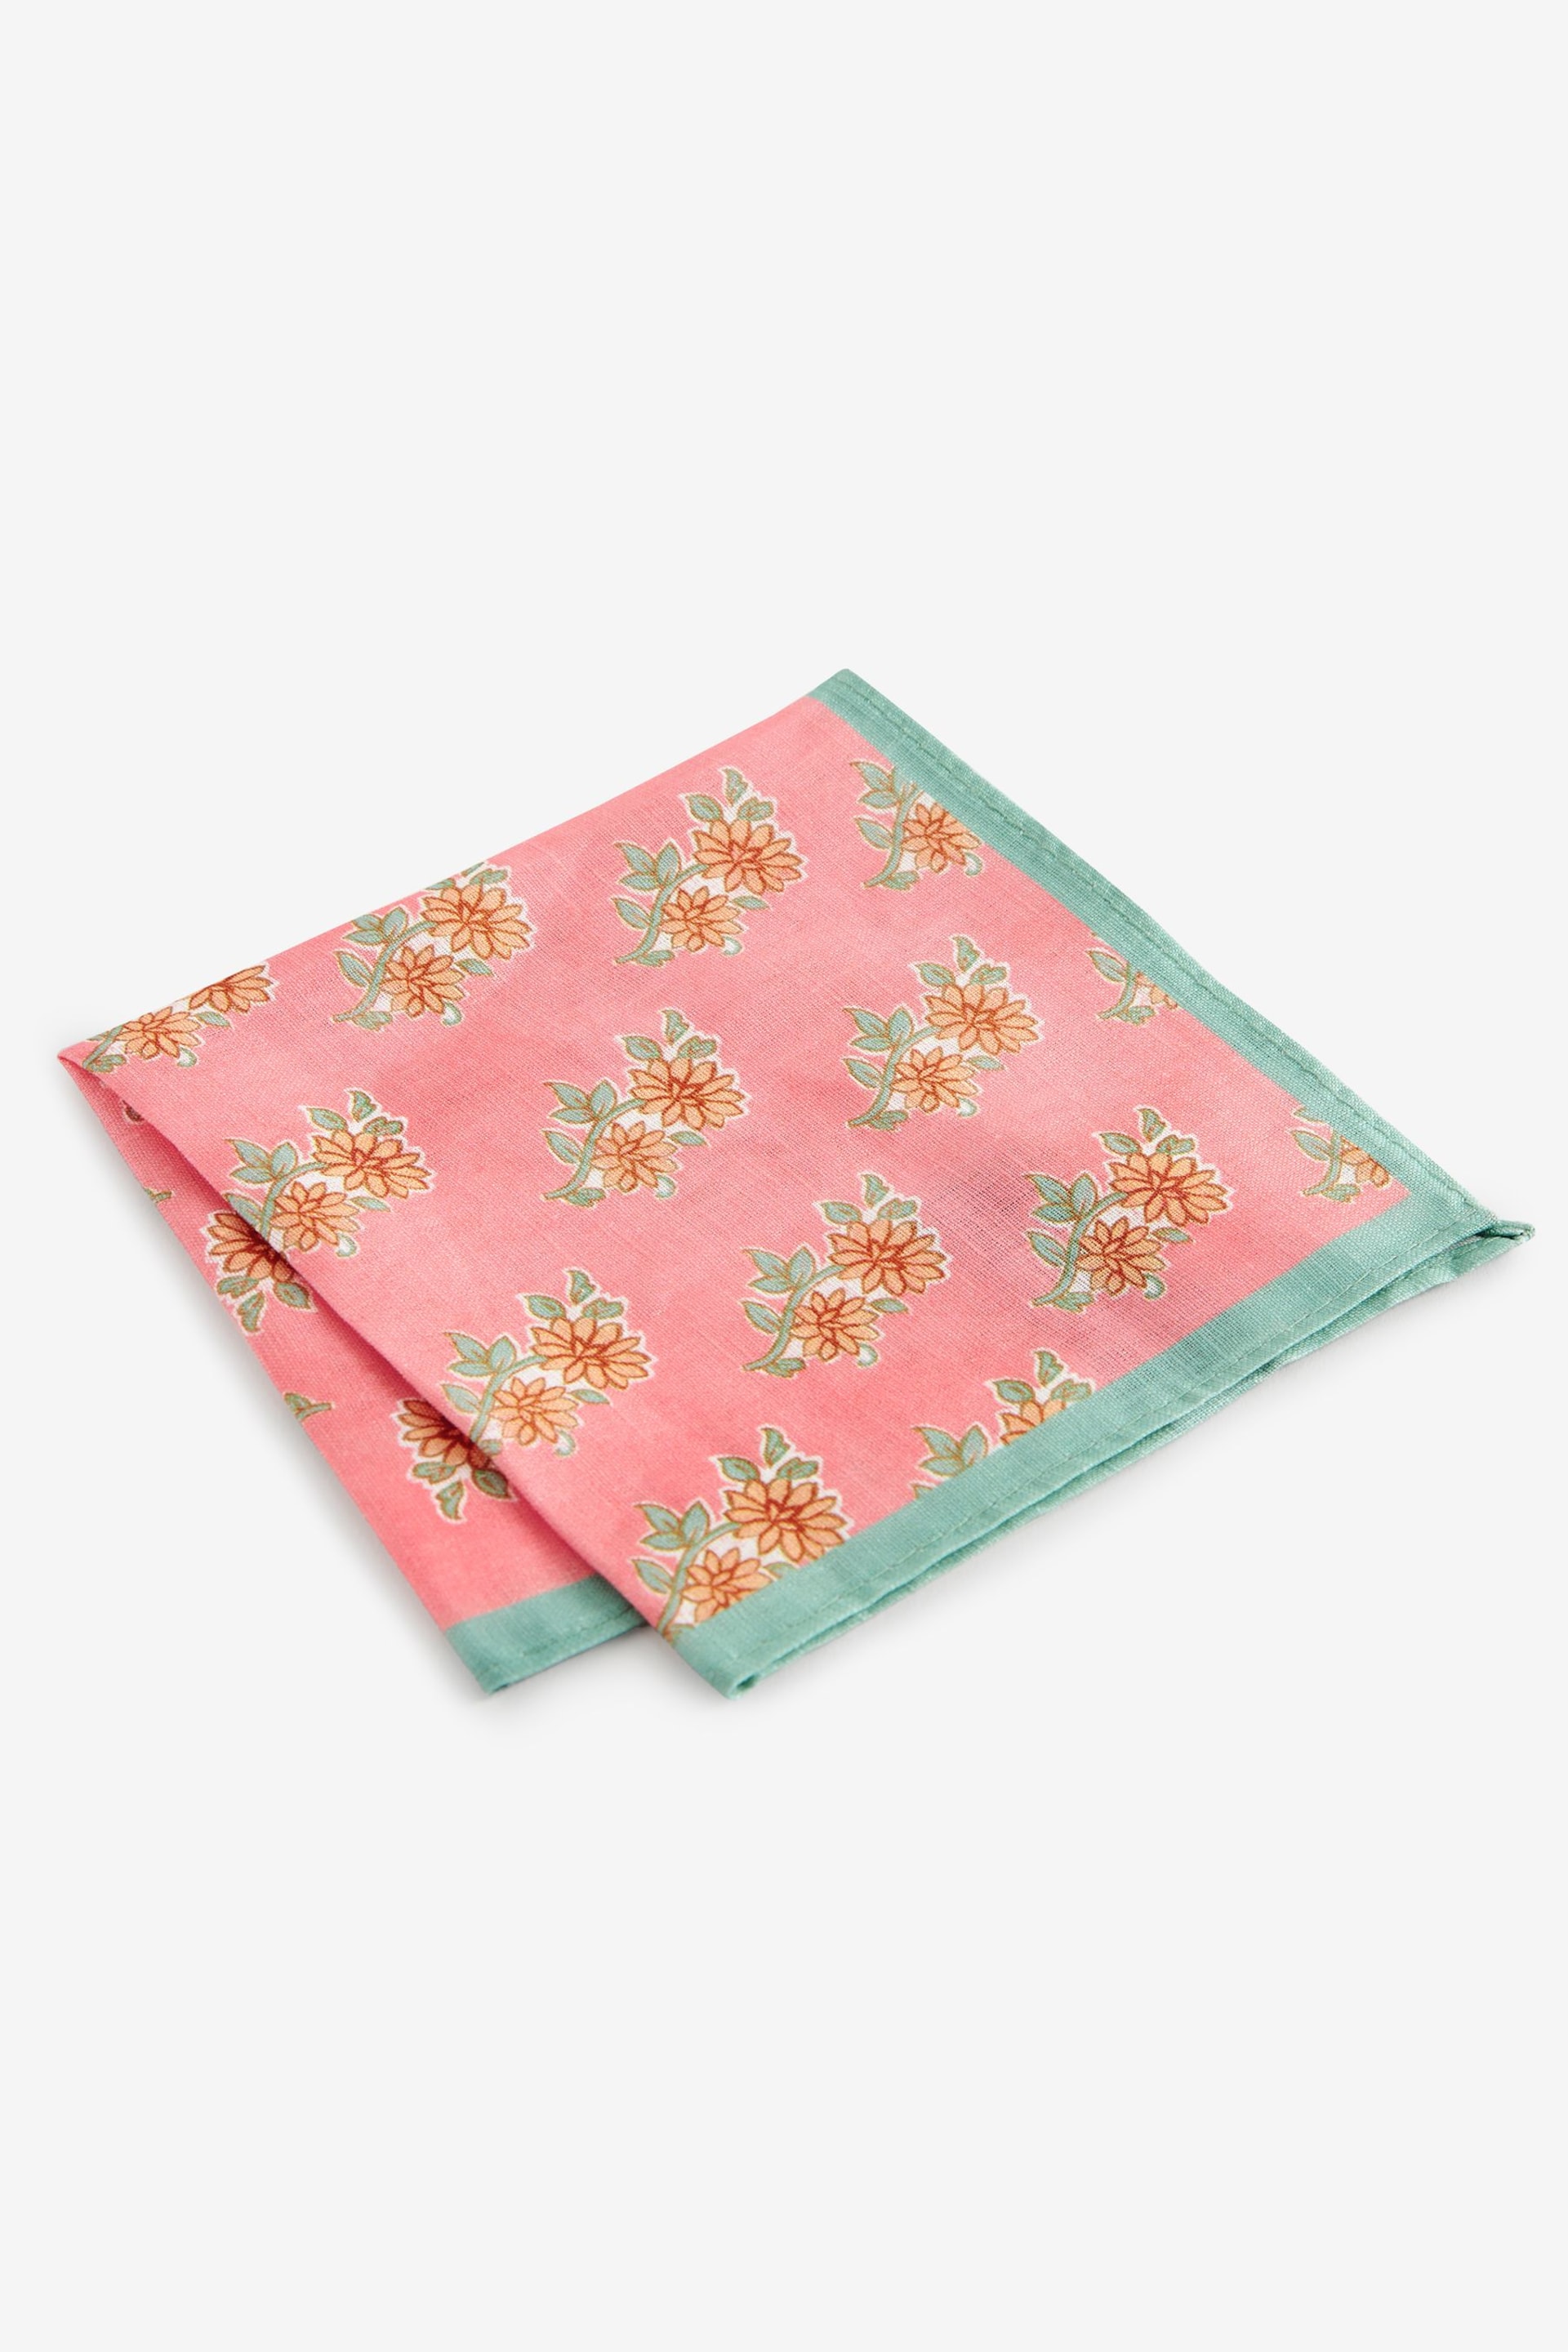 Seafoam Green/Pink Block Print Floral Linen Pocket Square - Image 1 of 3